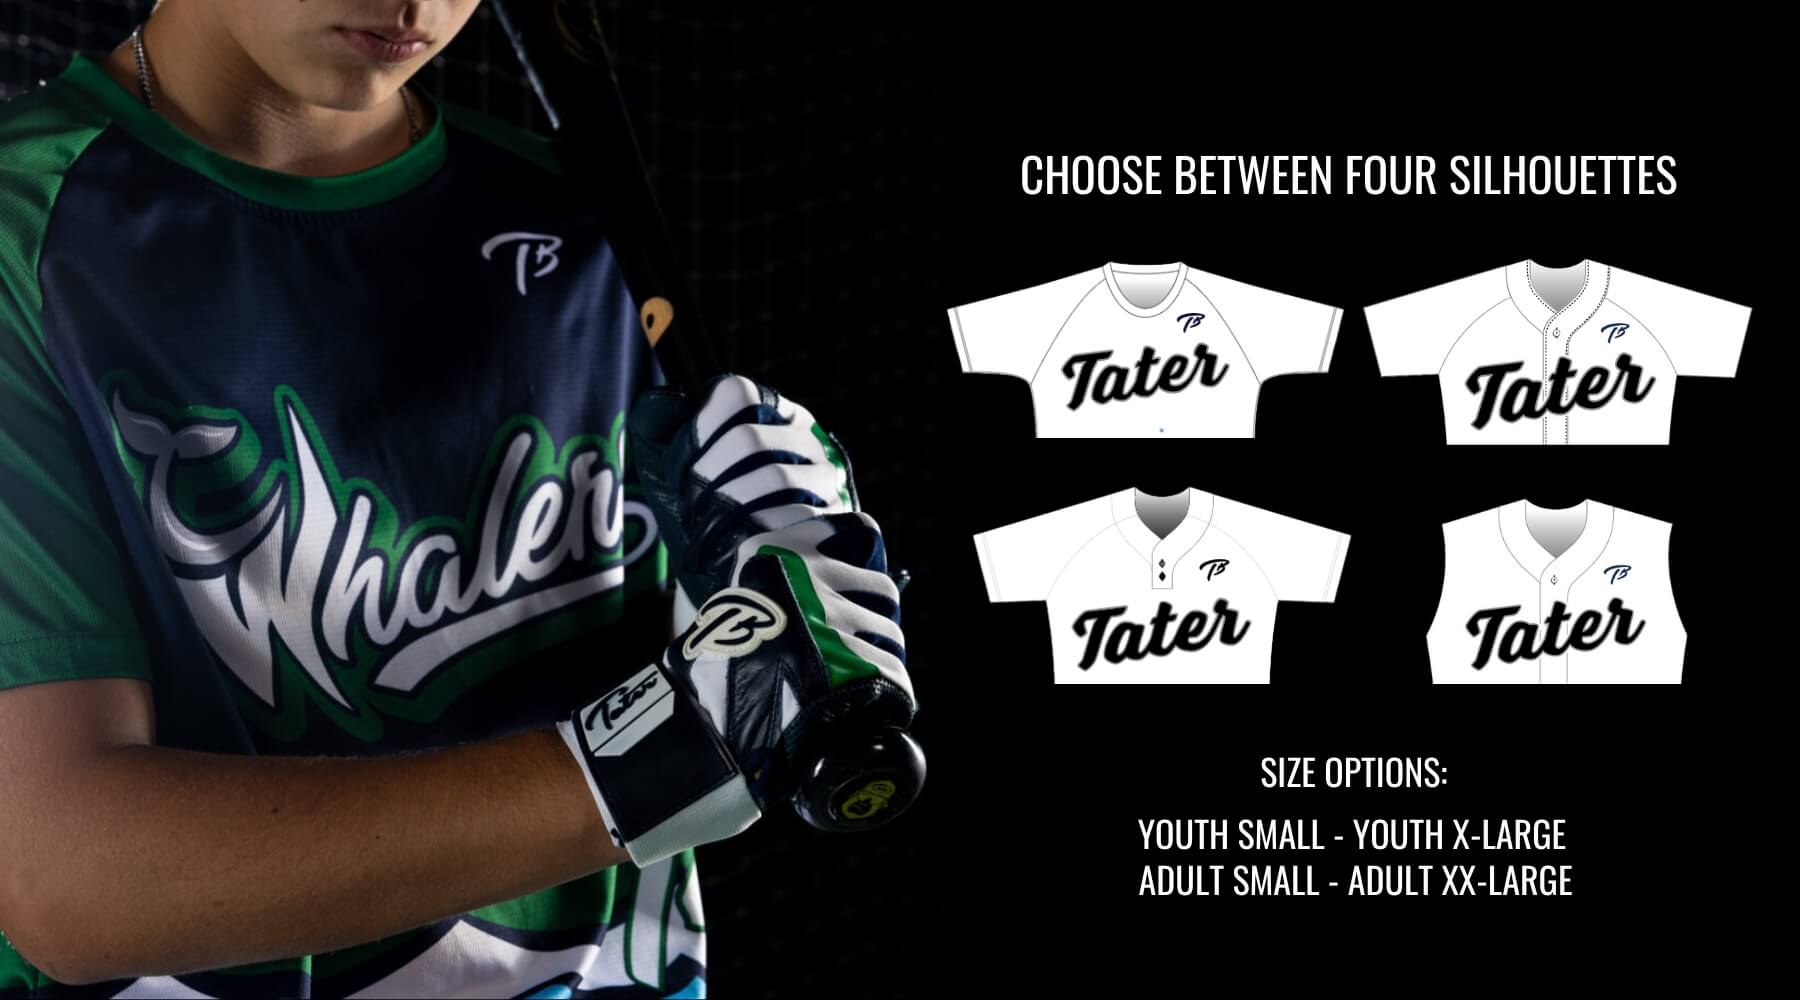 Personalized Baseball Jersey - Youth & Adult